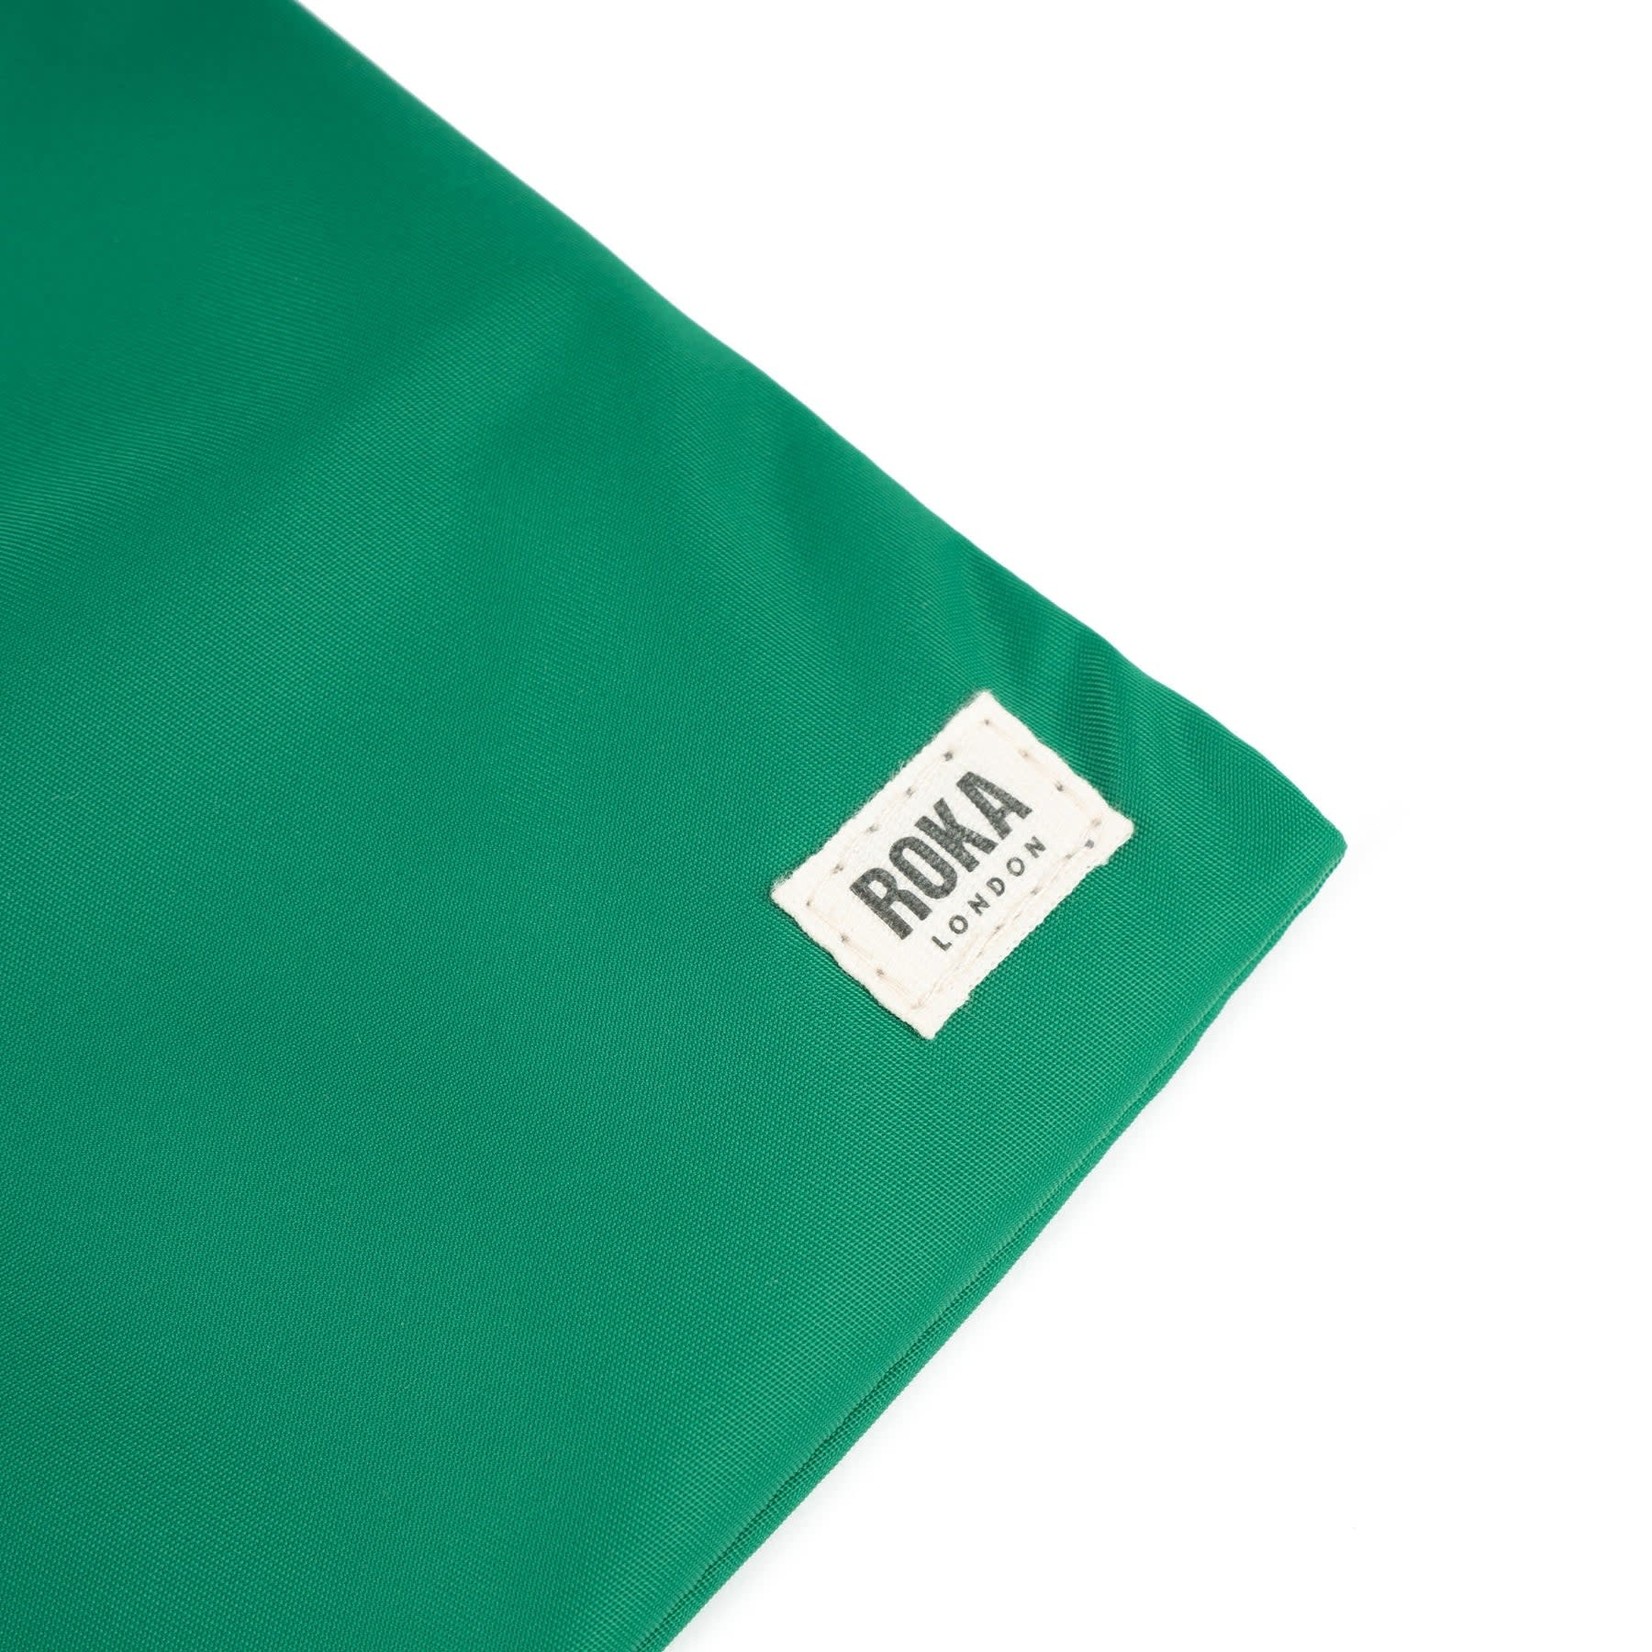 ROKA London Chelsea Emerald One Size Recycled Nylon